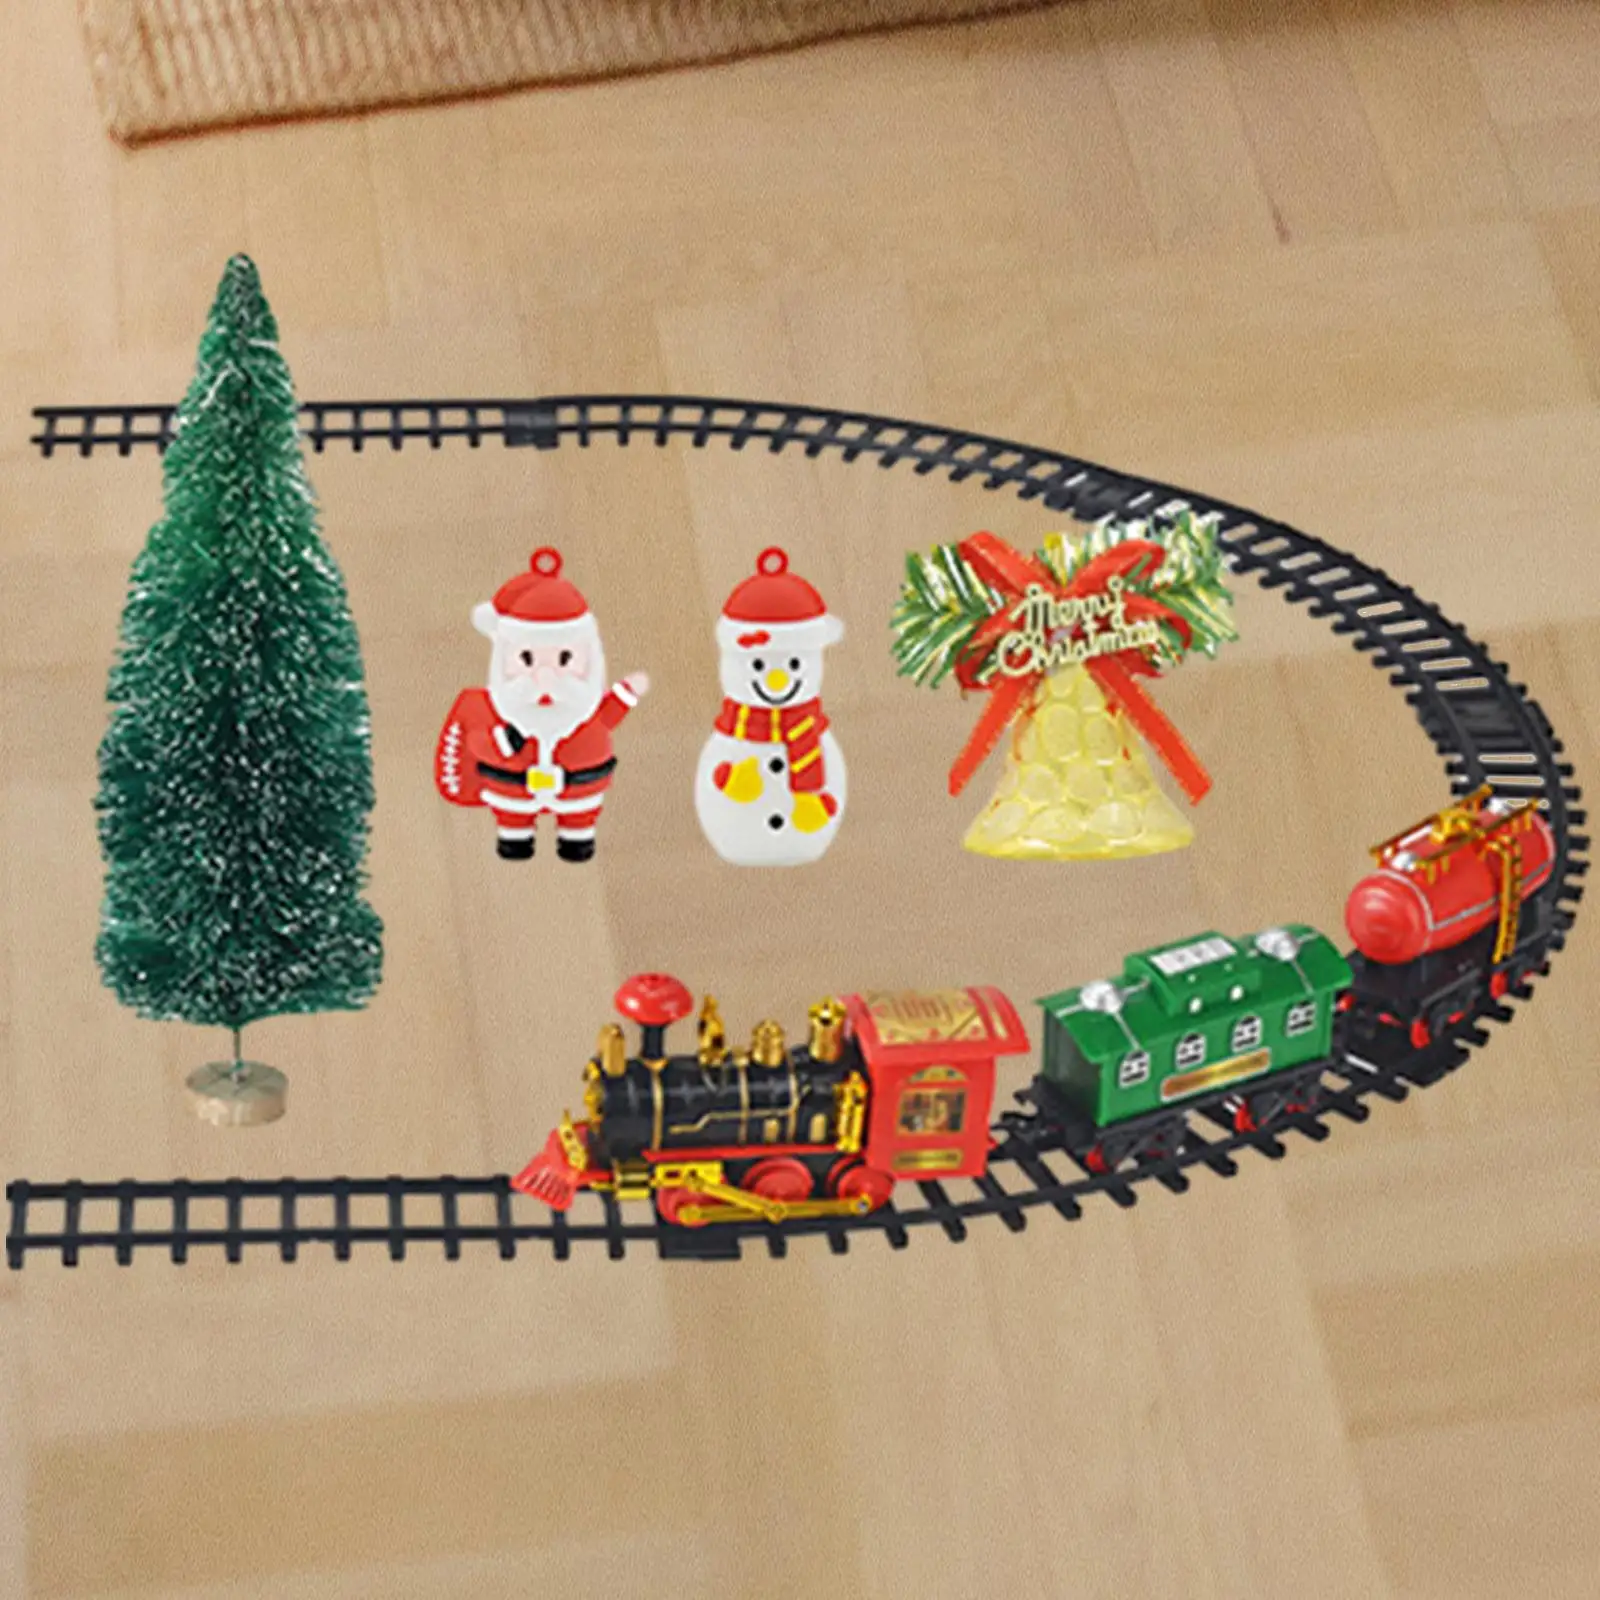 Electric Train Set Christmas Train Train Toys Decoration Small Trains Track Railway Train Track for Children Boys Birthday Gifts